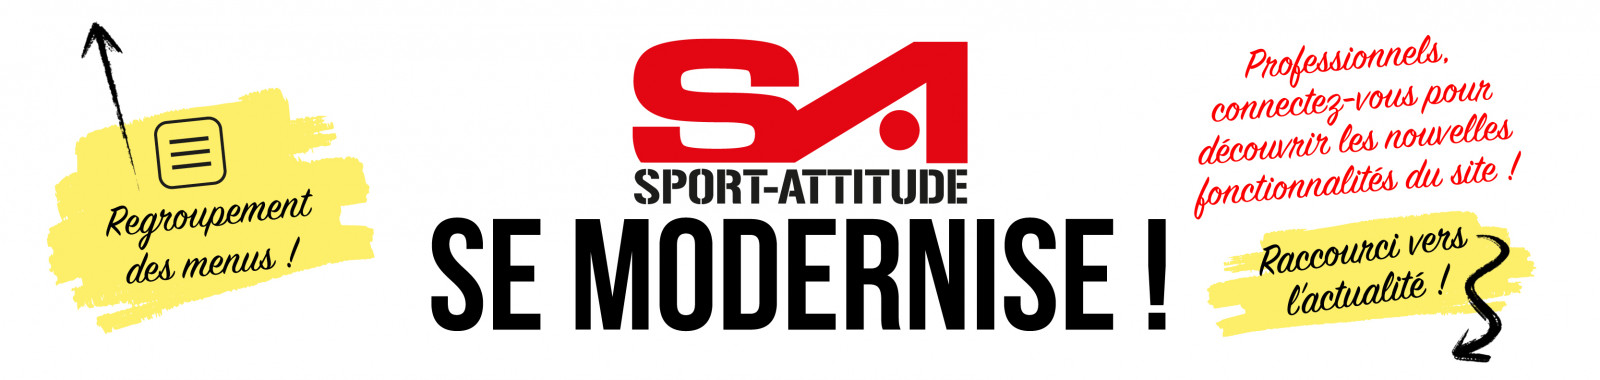 Sport-Attitude se modernise !